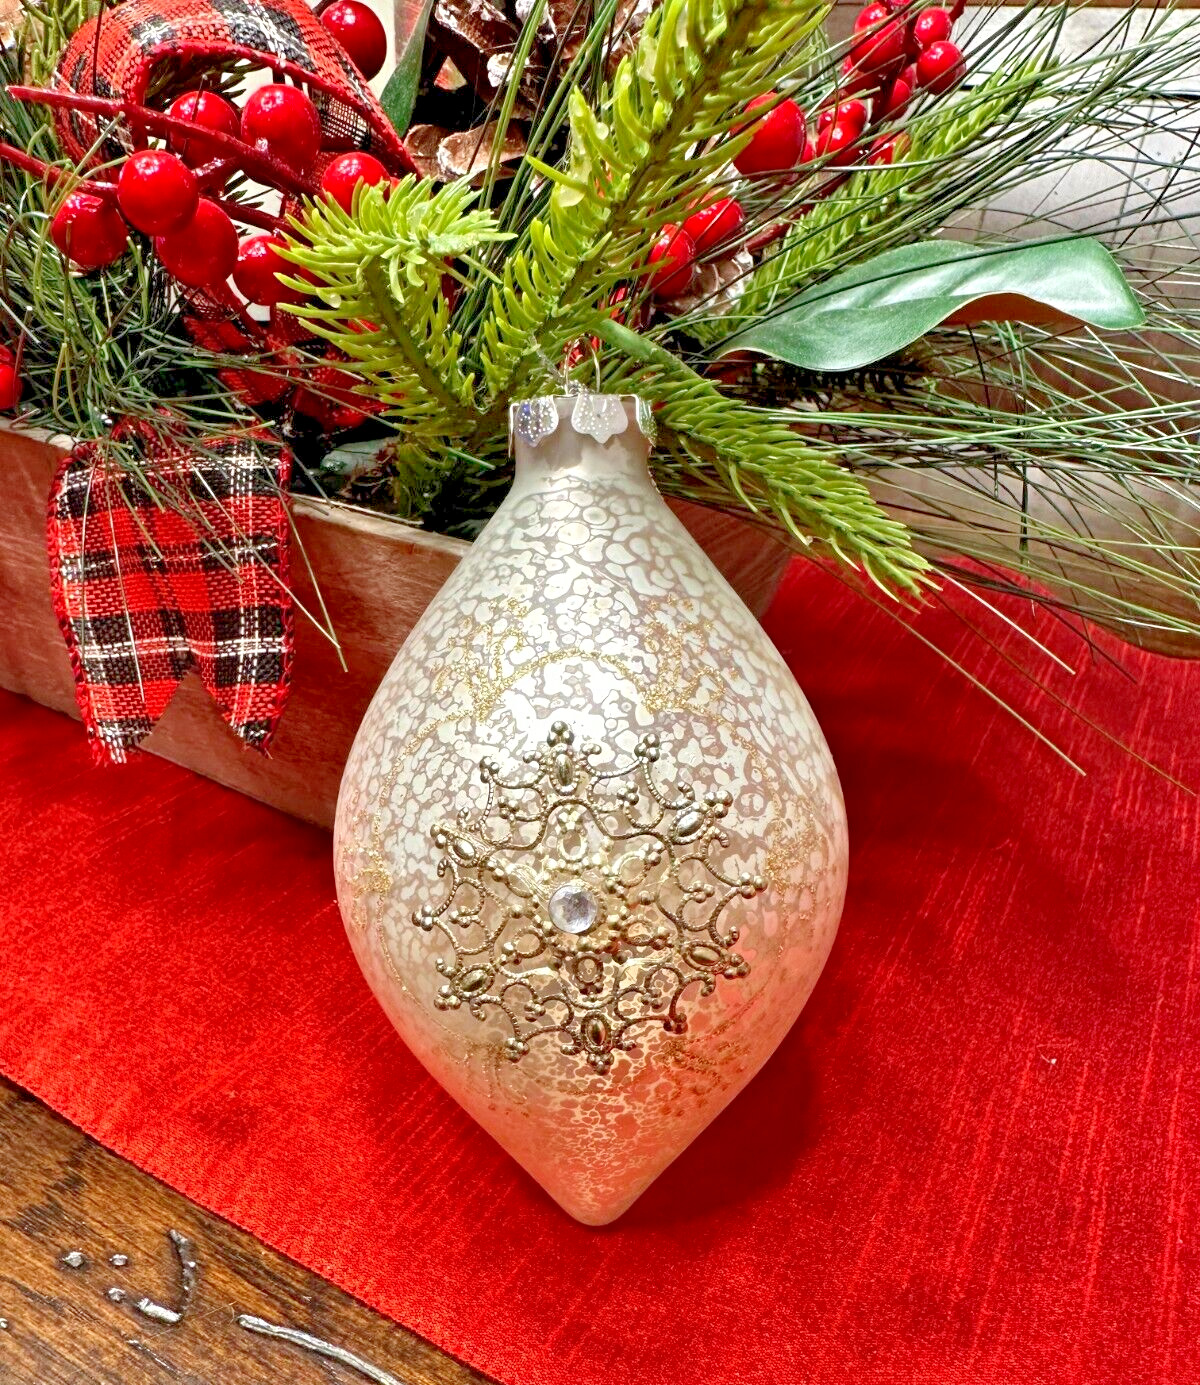 Beautiful Vintage Jumbo Glass Christmas Ornament Gold Crackle 5.5